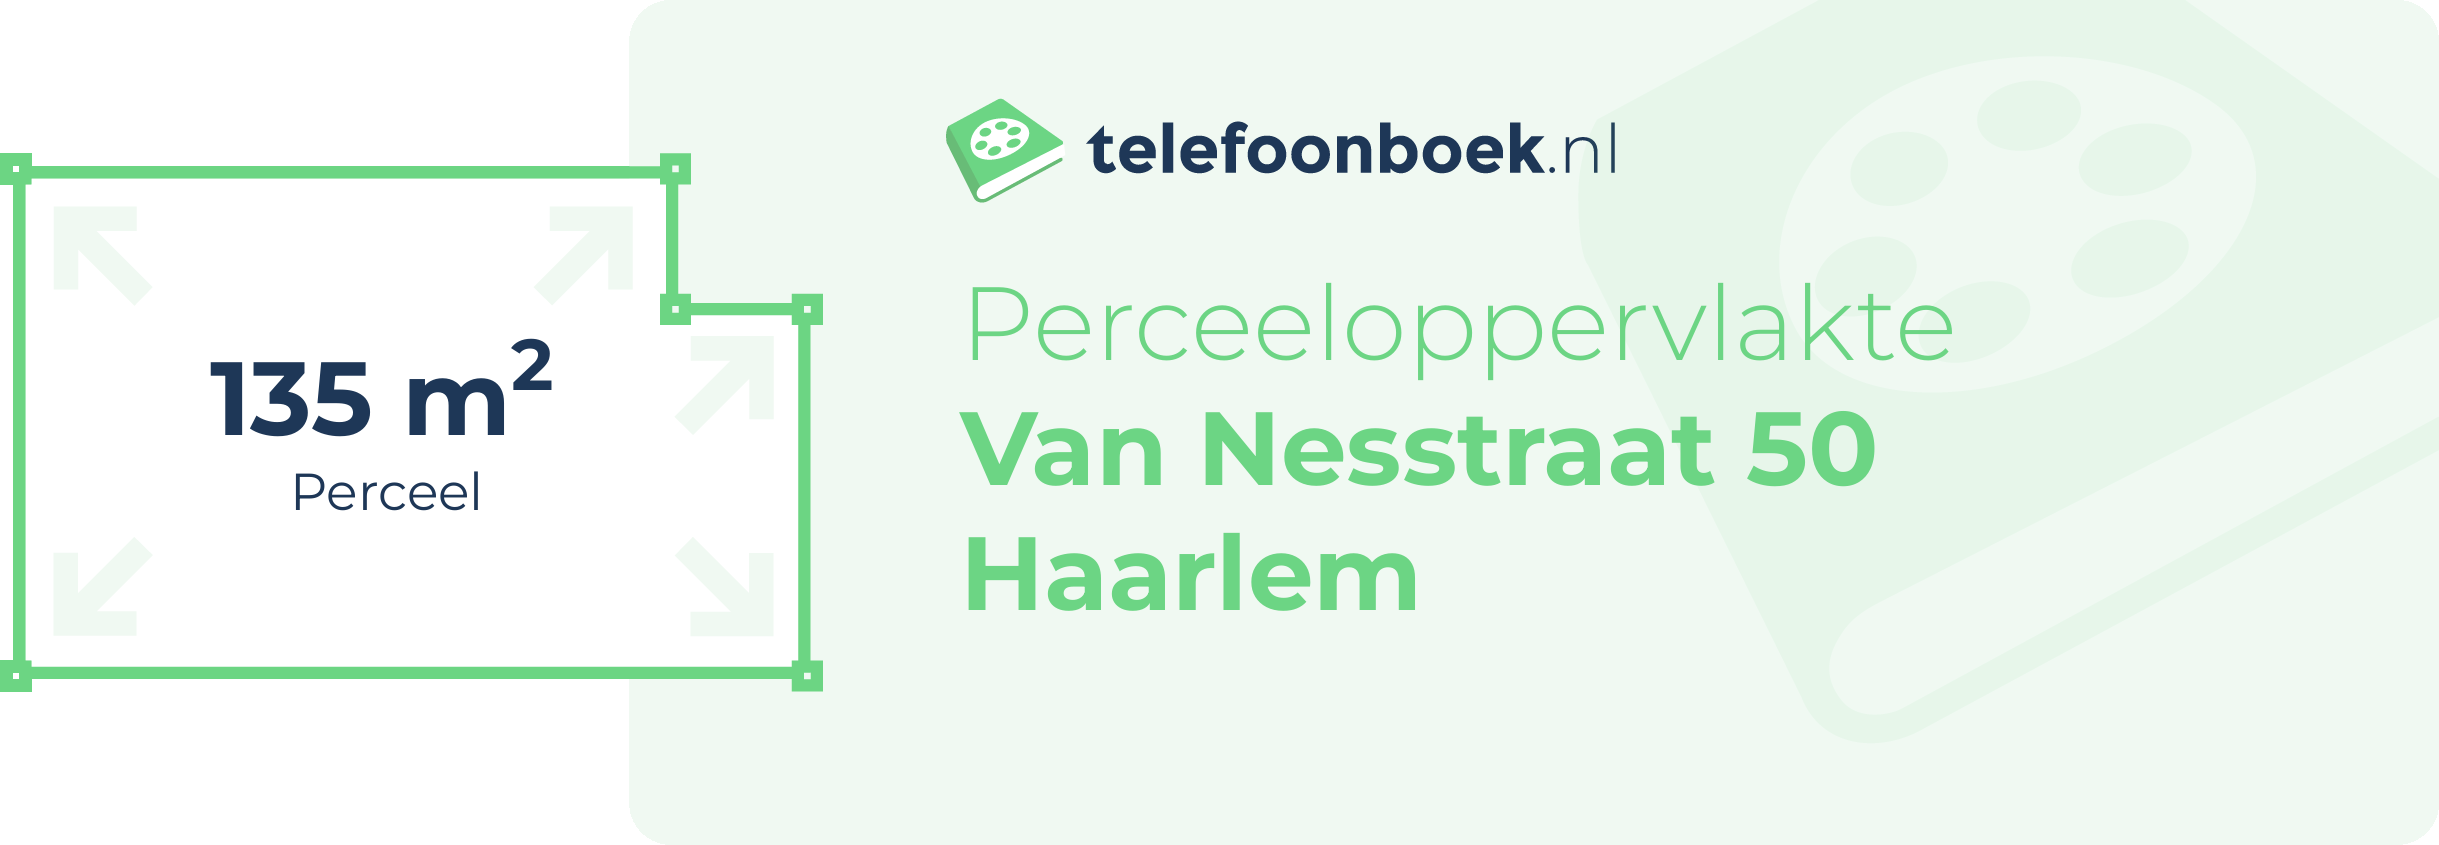 Perceeloppervlakte Van Nesstraat 50 Haarlem